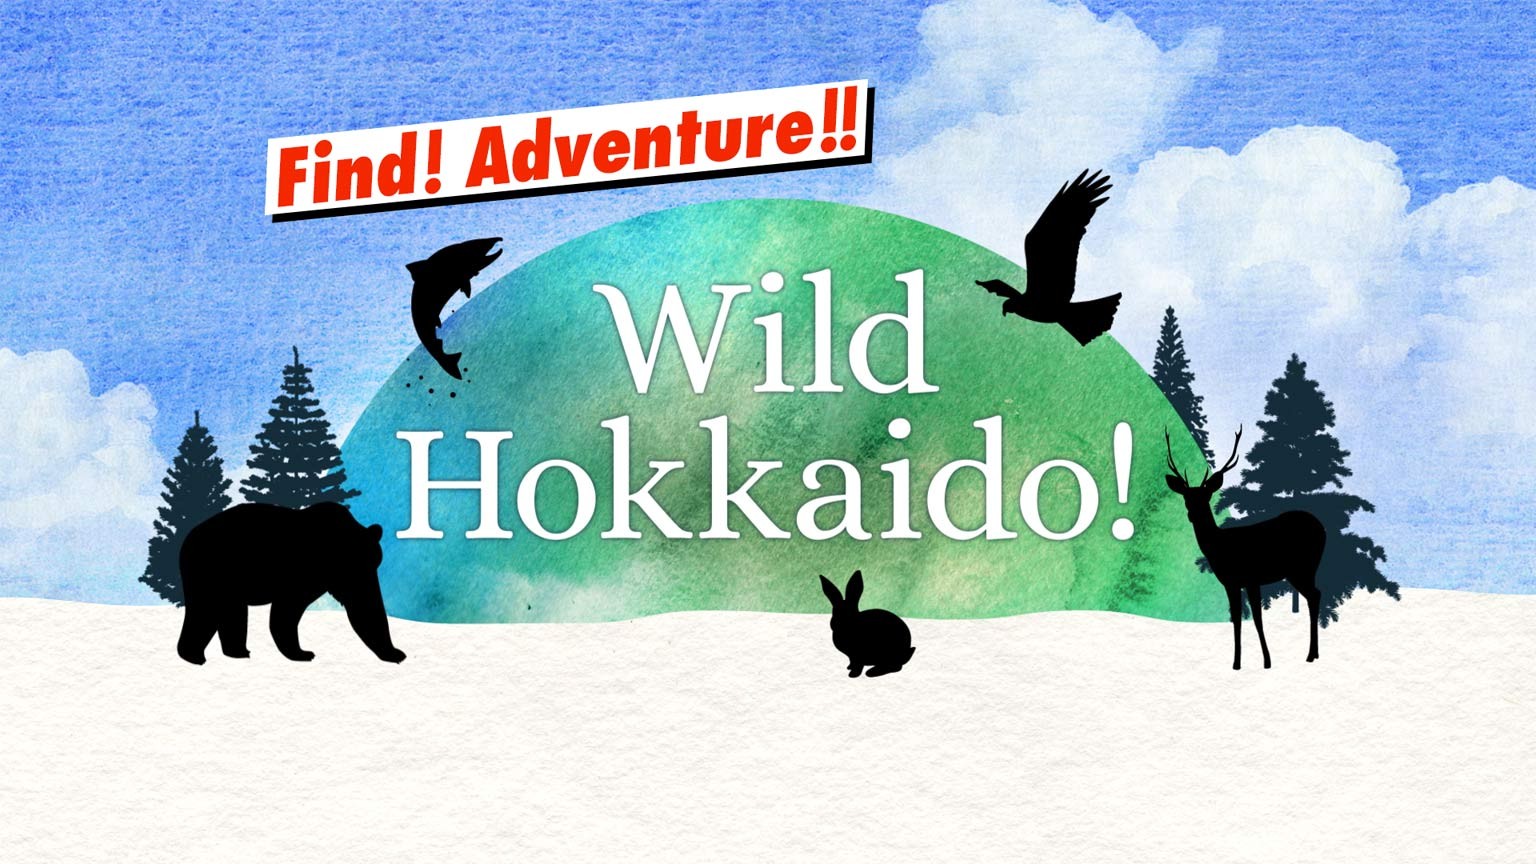 Alam Liar Hokkaido!
Wild Hokkaido!